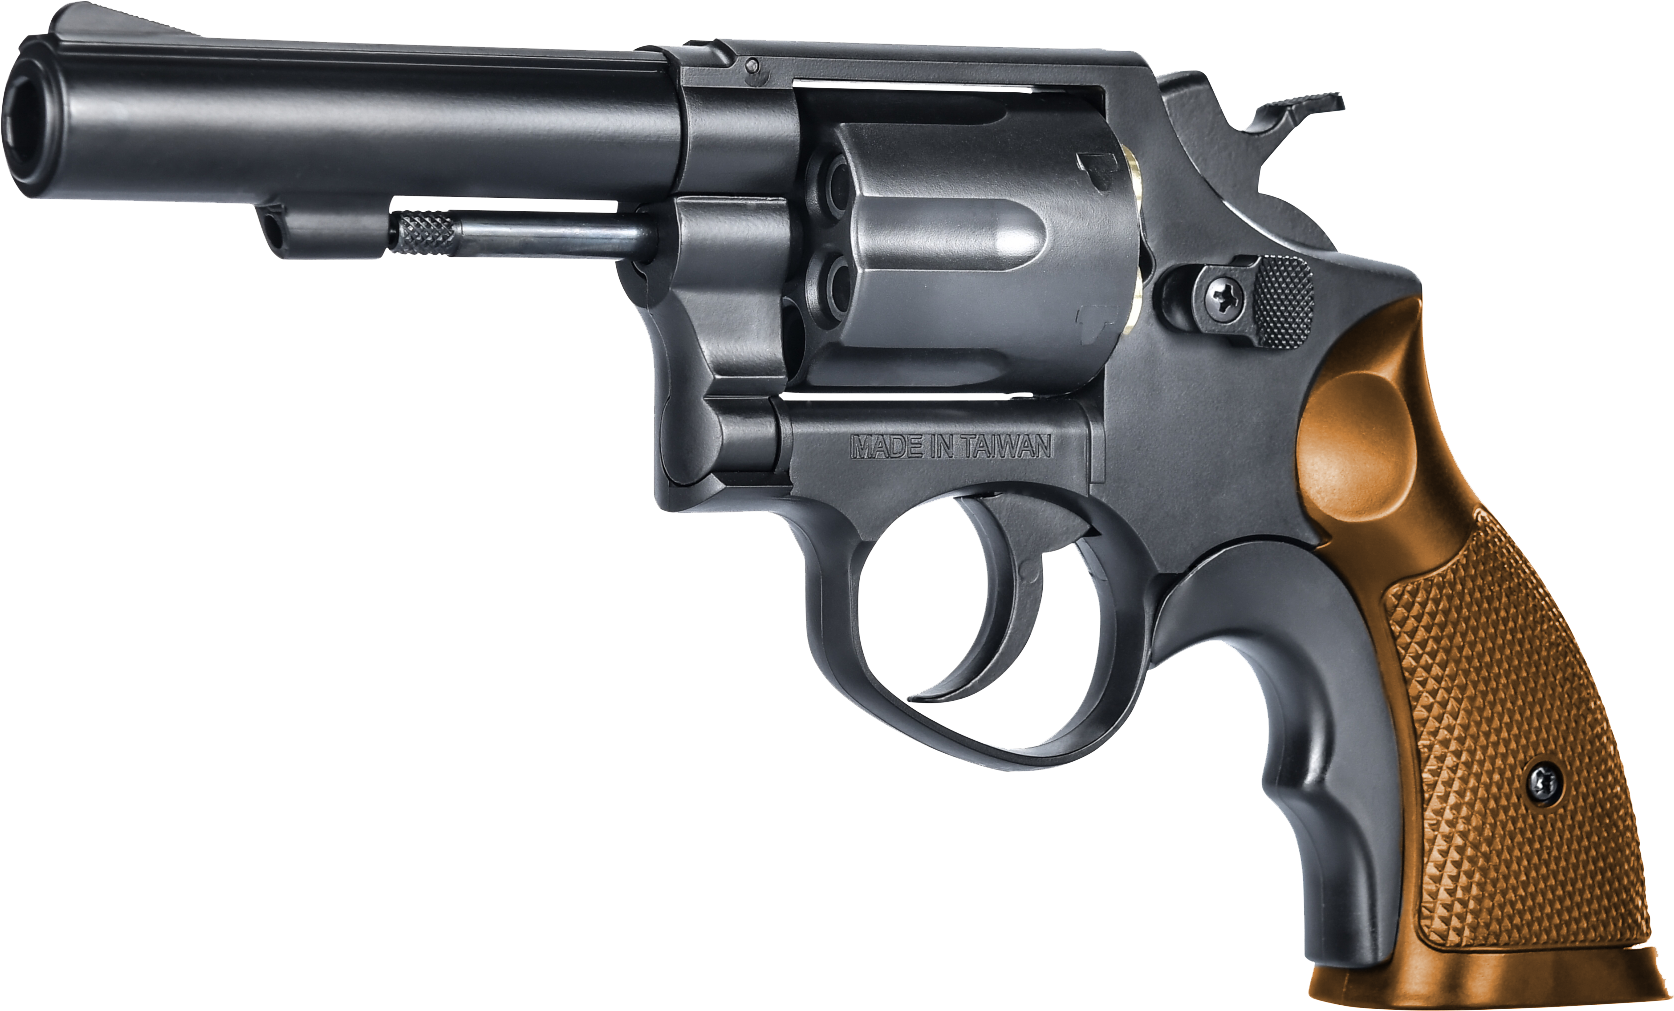 HFC Revolver Gaz (Noir)